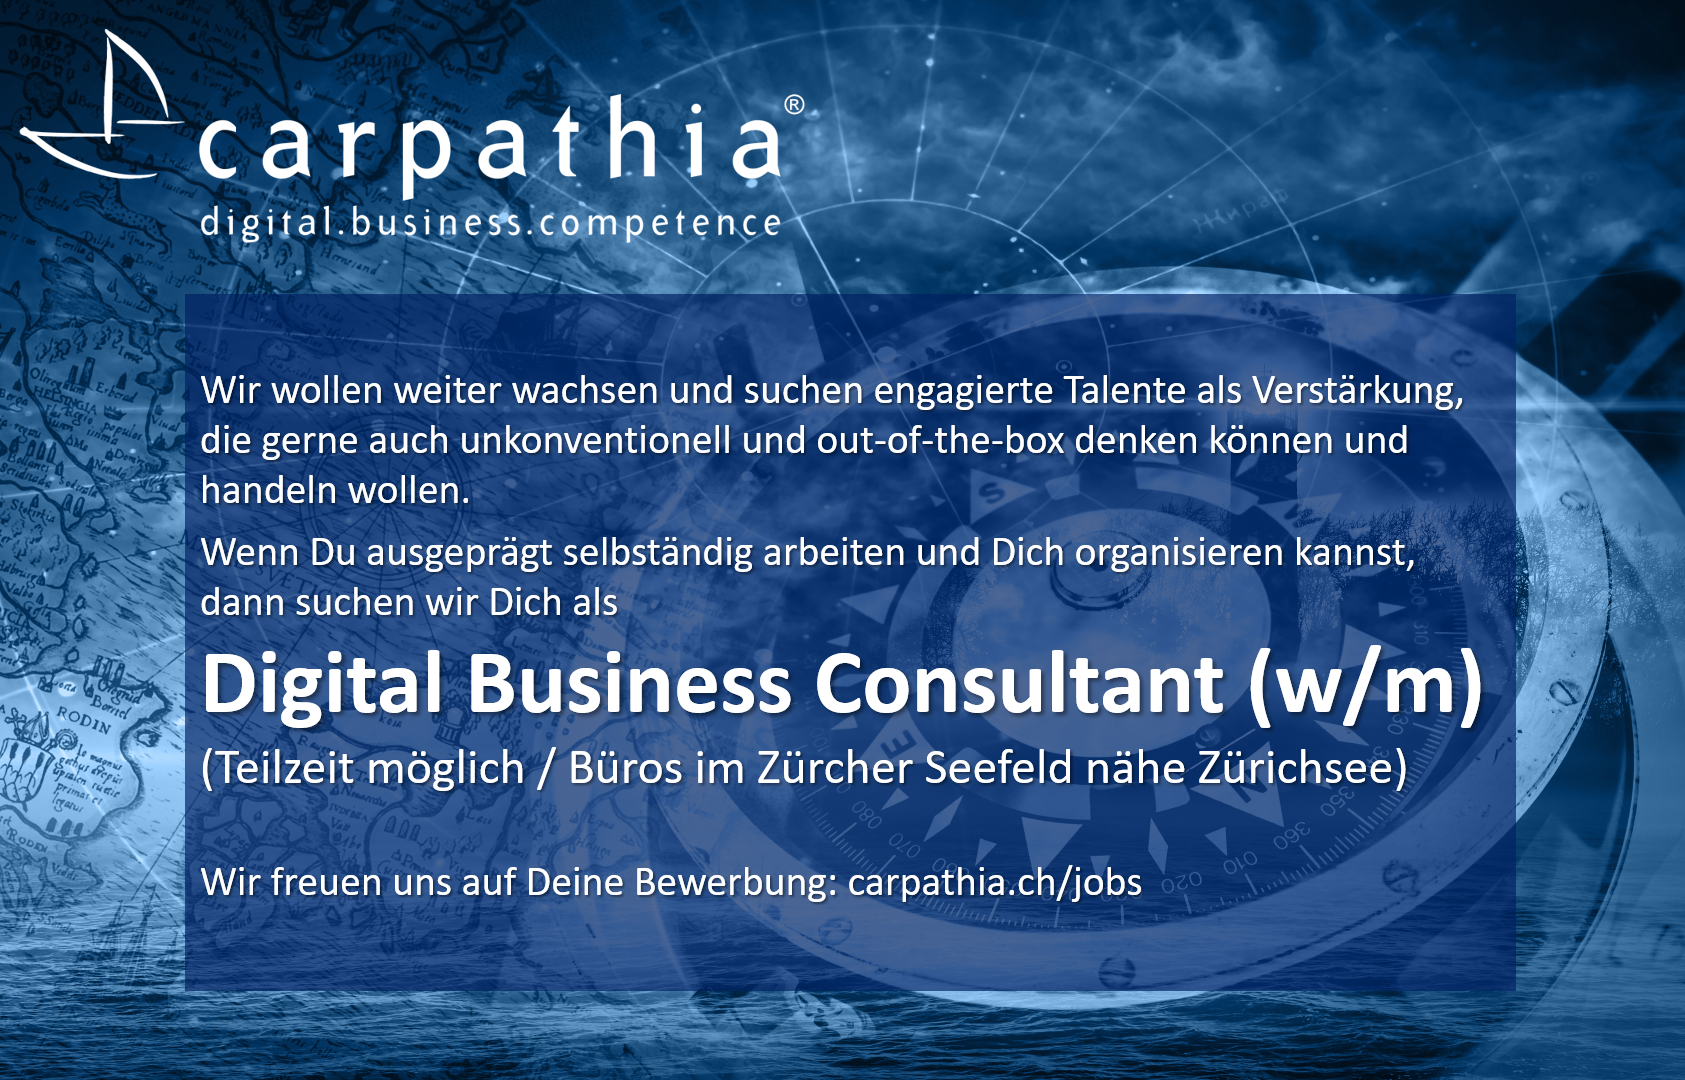 Carpathia sucht: Digital Business Consultant (w/m)